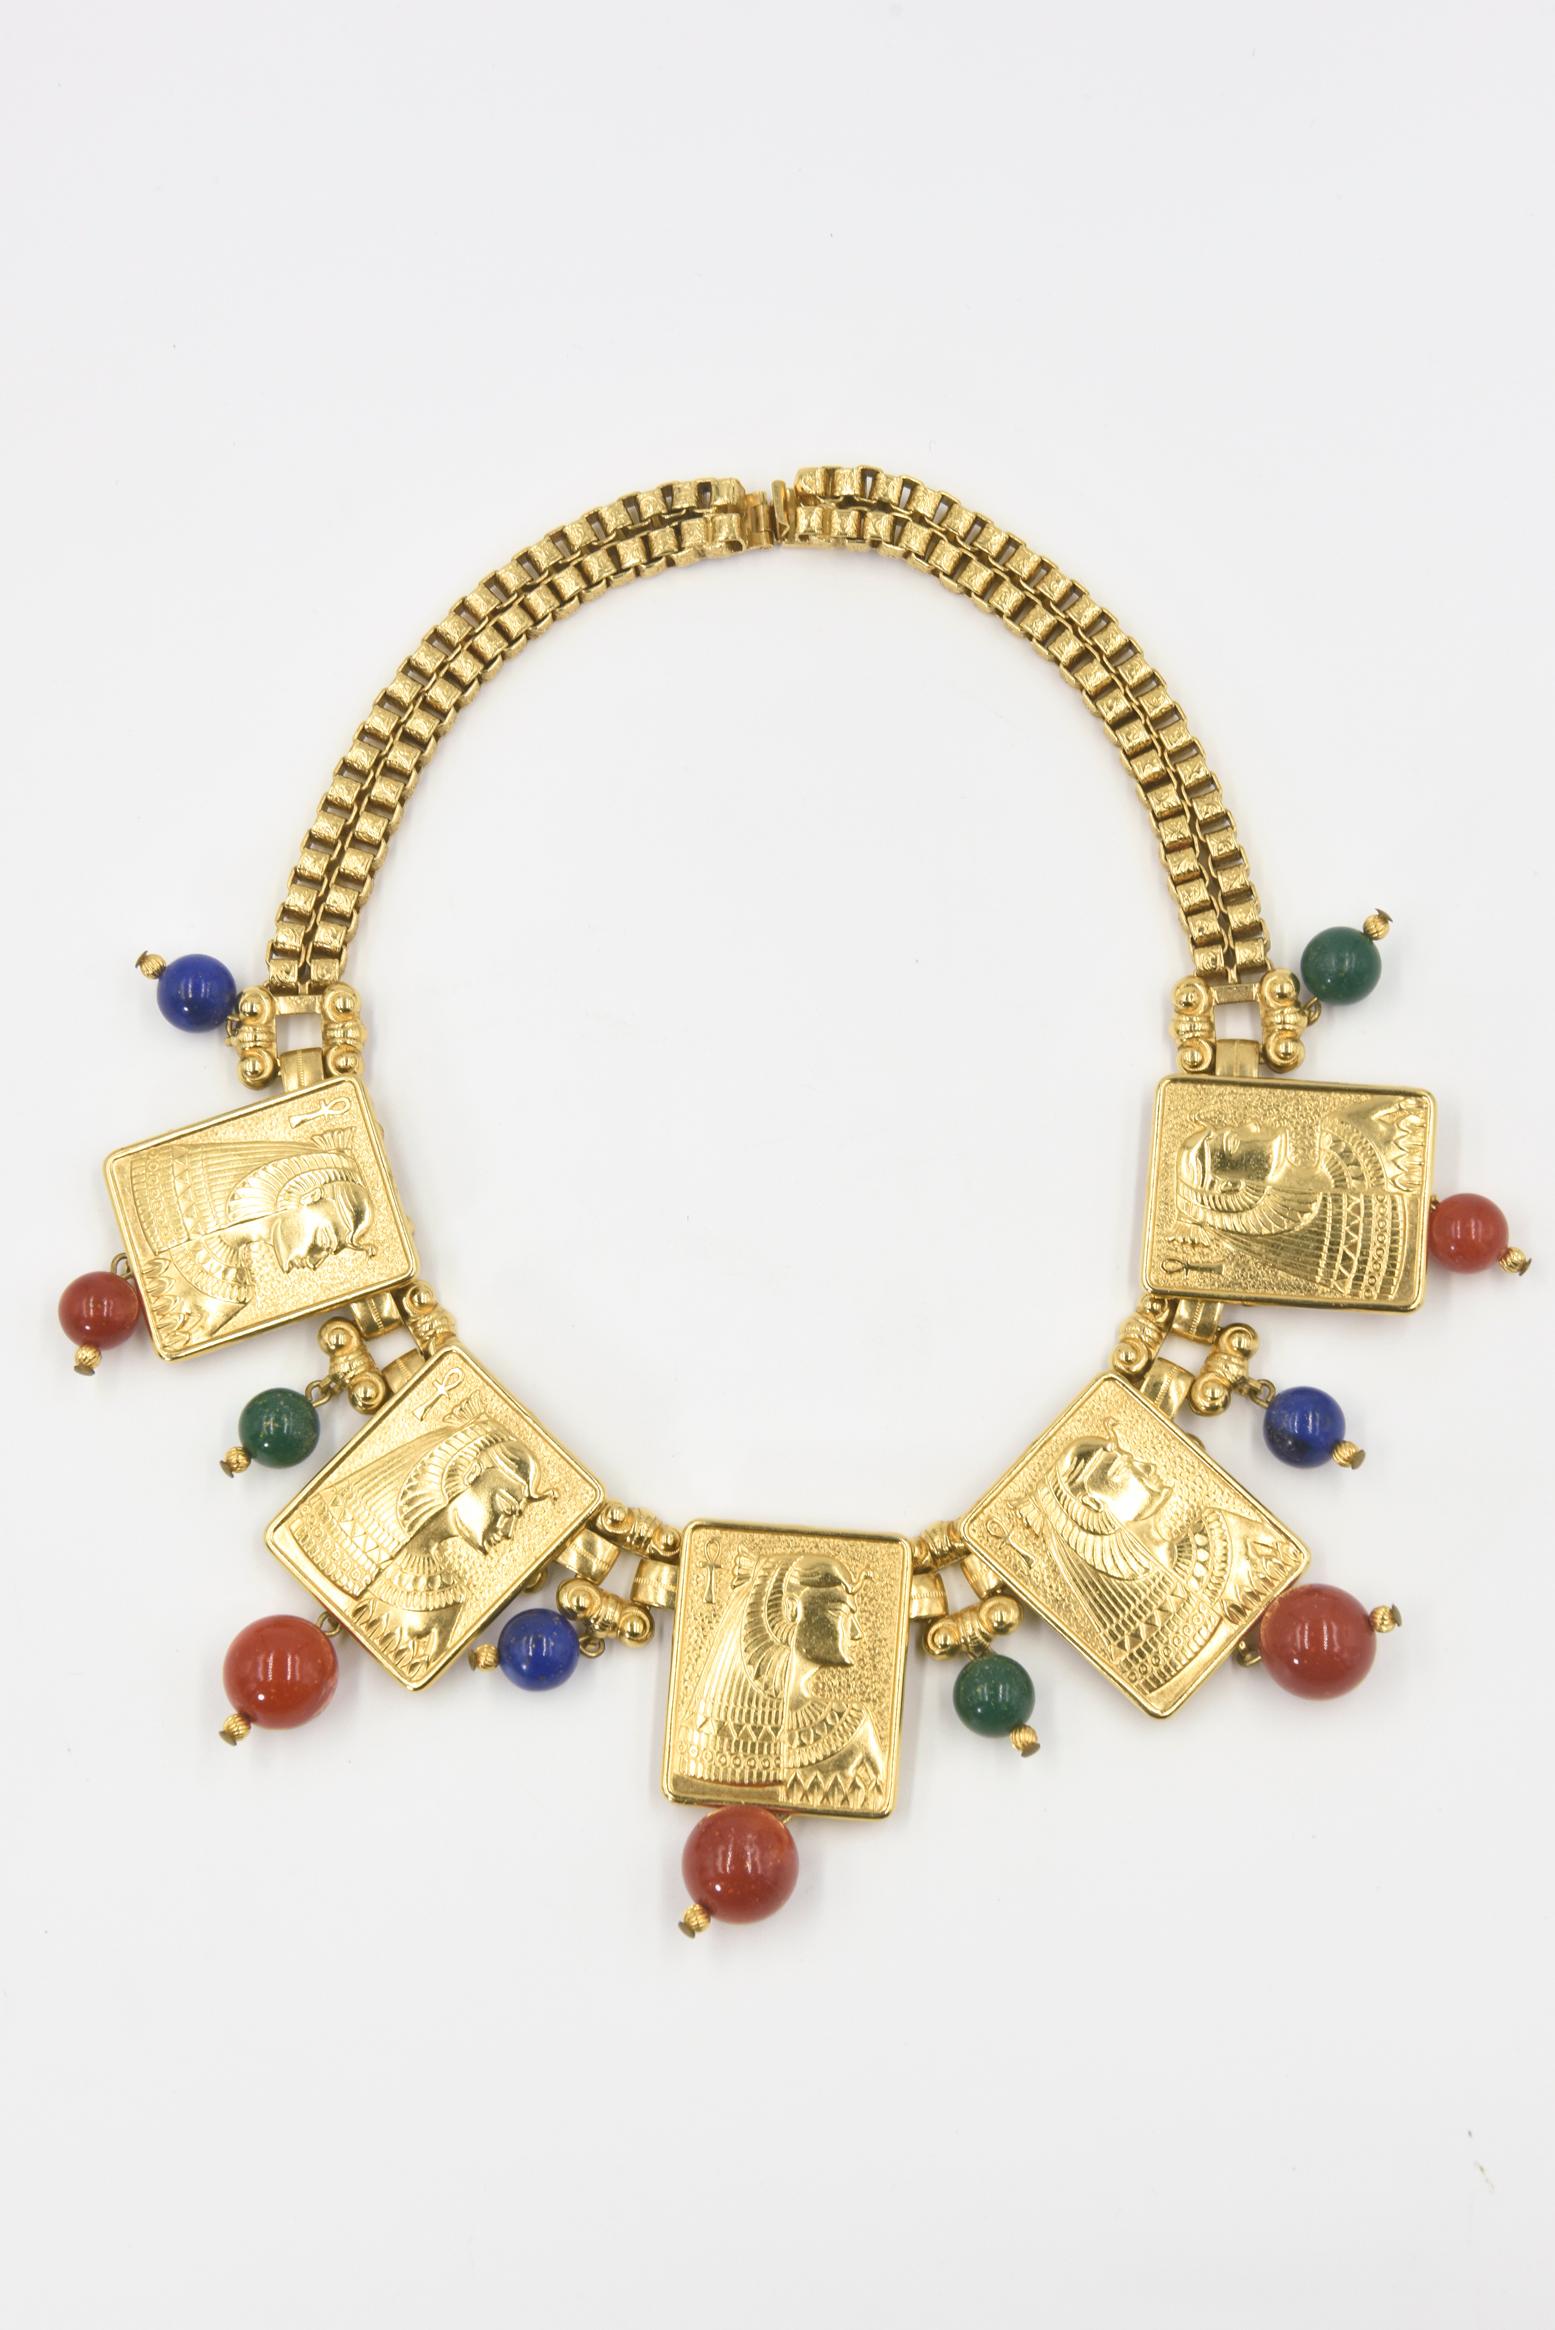 cleopatra jewelry museum